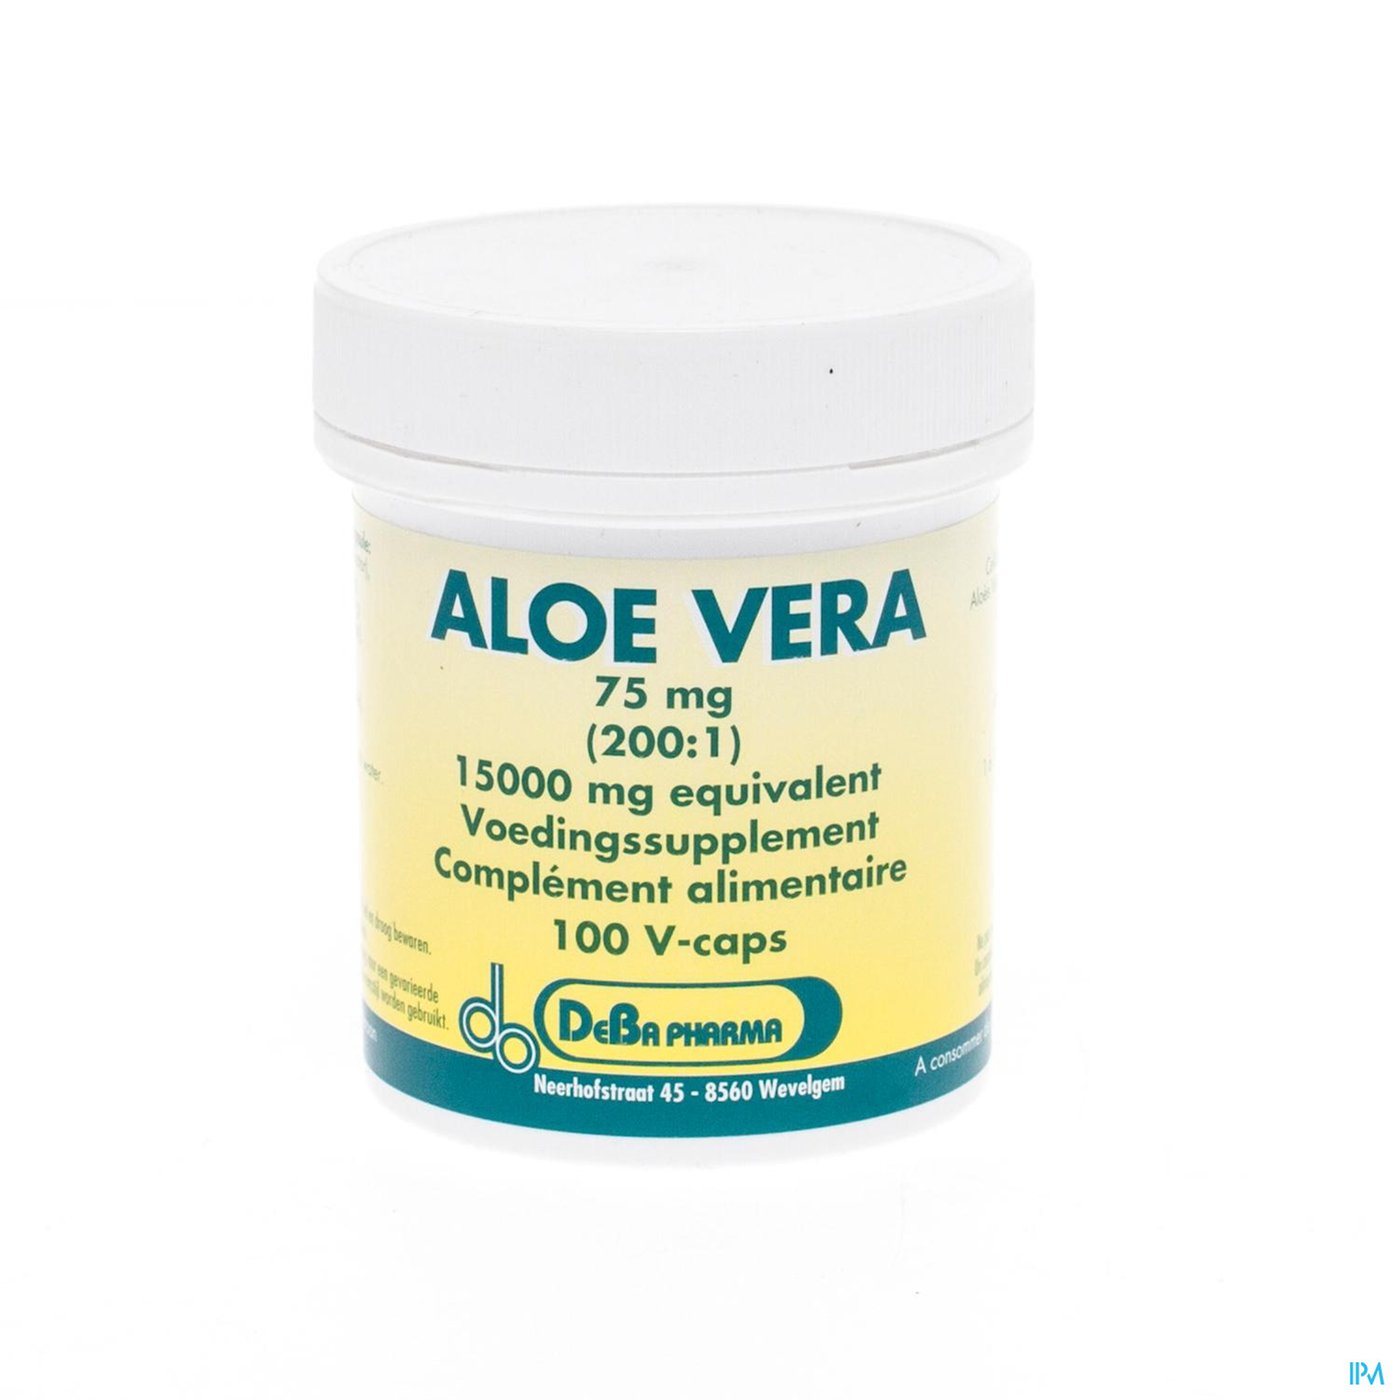 Aloe Vera 200:1 V-caps 100x75mg Deba packshot